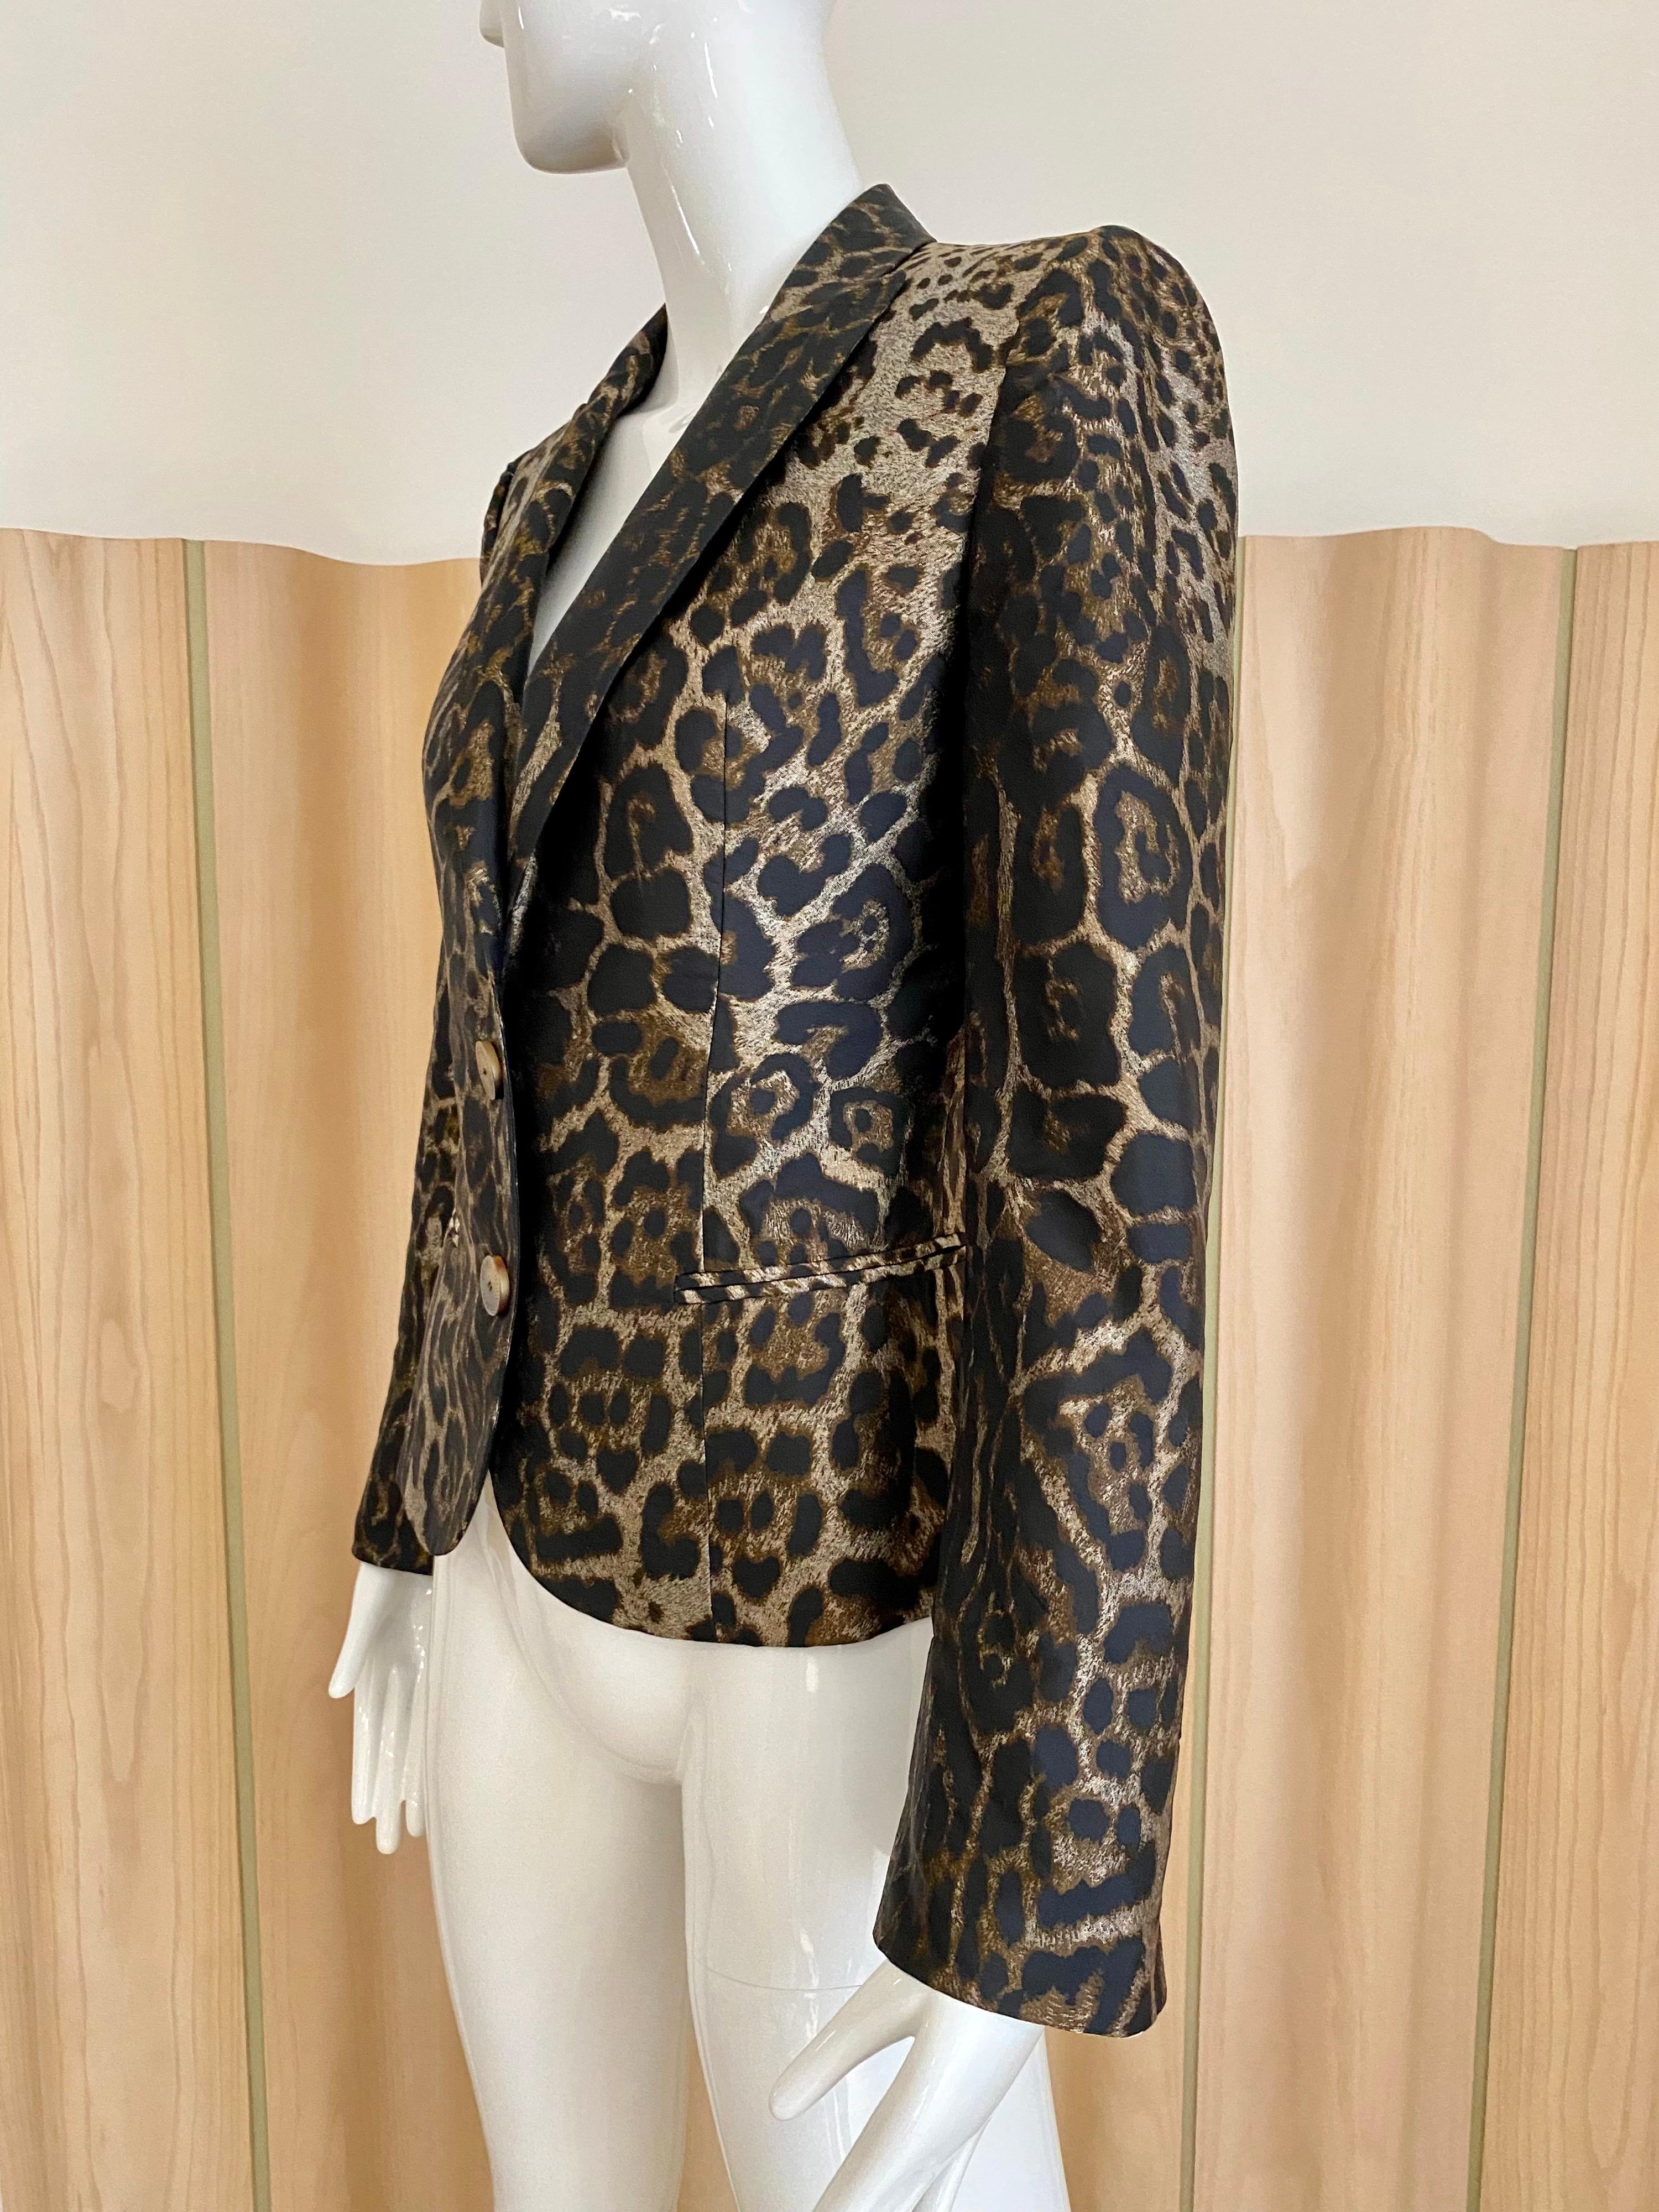 Gianfranco Ferre Leopard Print silk blazer jacket .
Marked size 38/ Fit size 2/4/ Small
Shoulder: 15” ( flat) 
Bust: 34”/ Waist: 30” / Hip : 34” / sleeve length: 24”